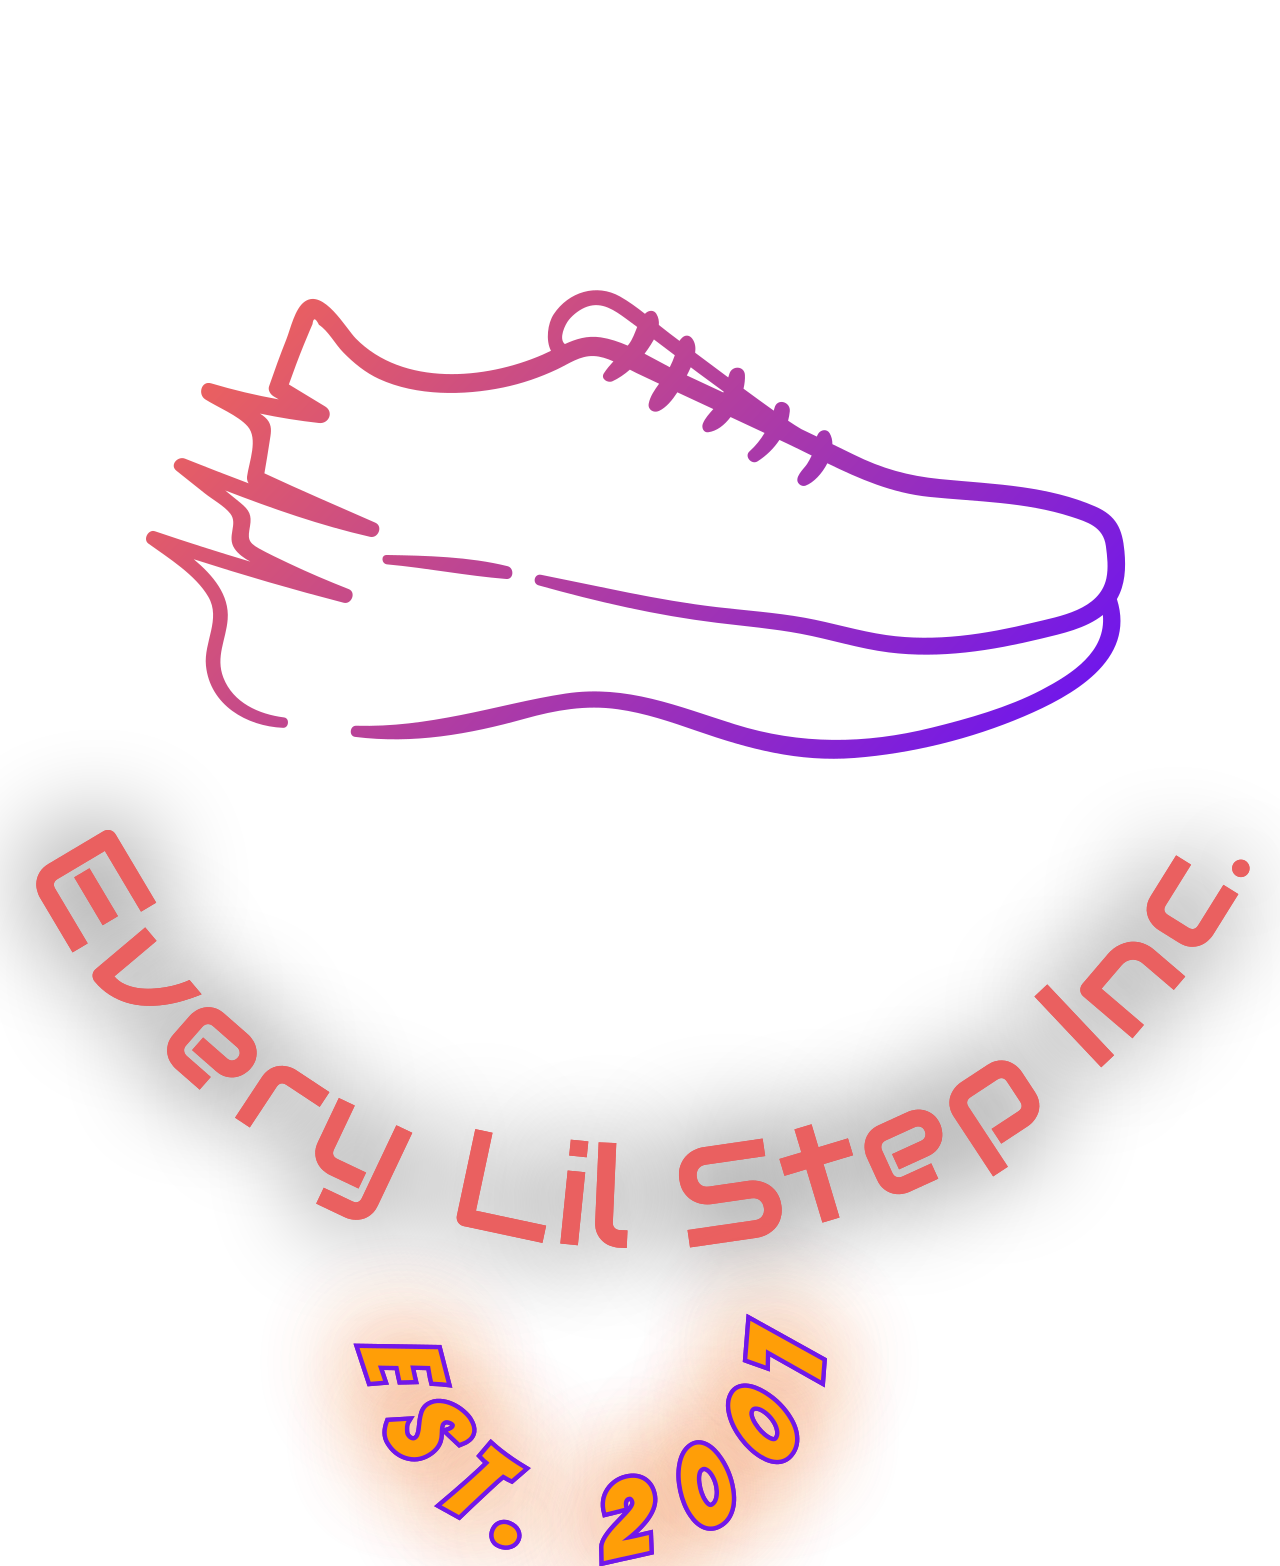 Every Lil Step Inc.'s logo